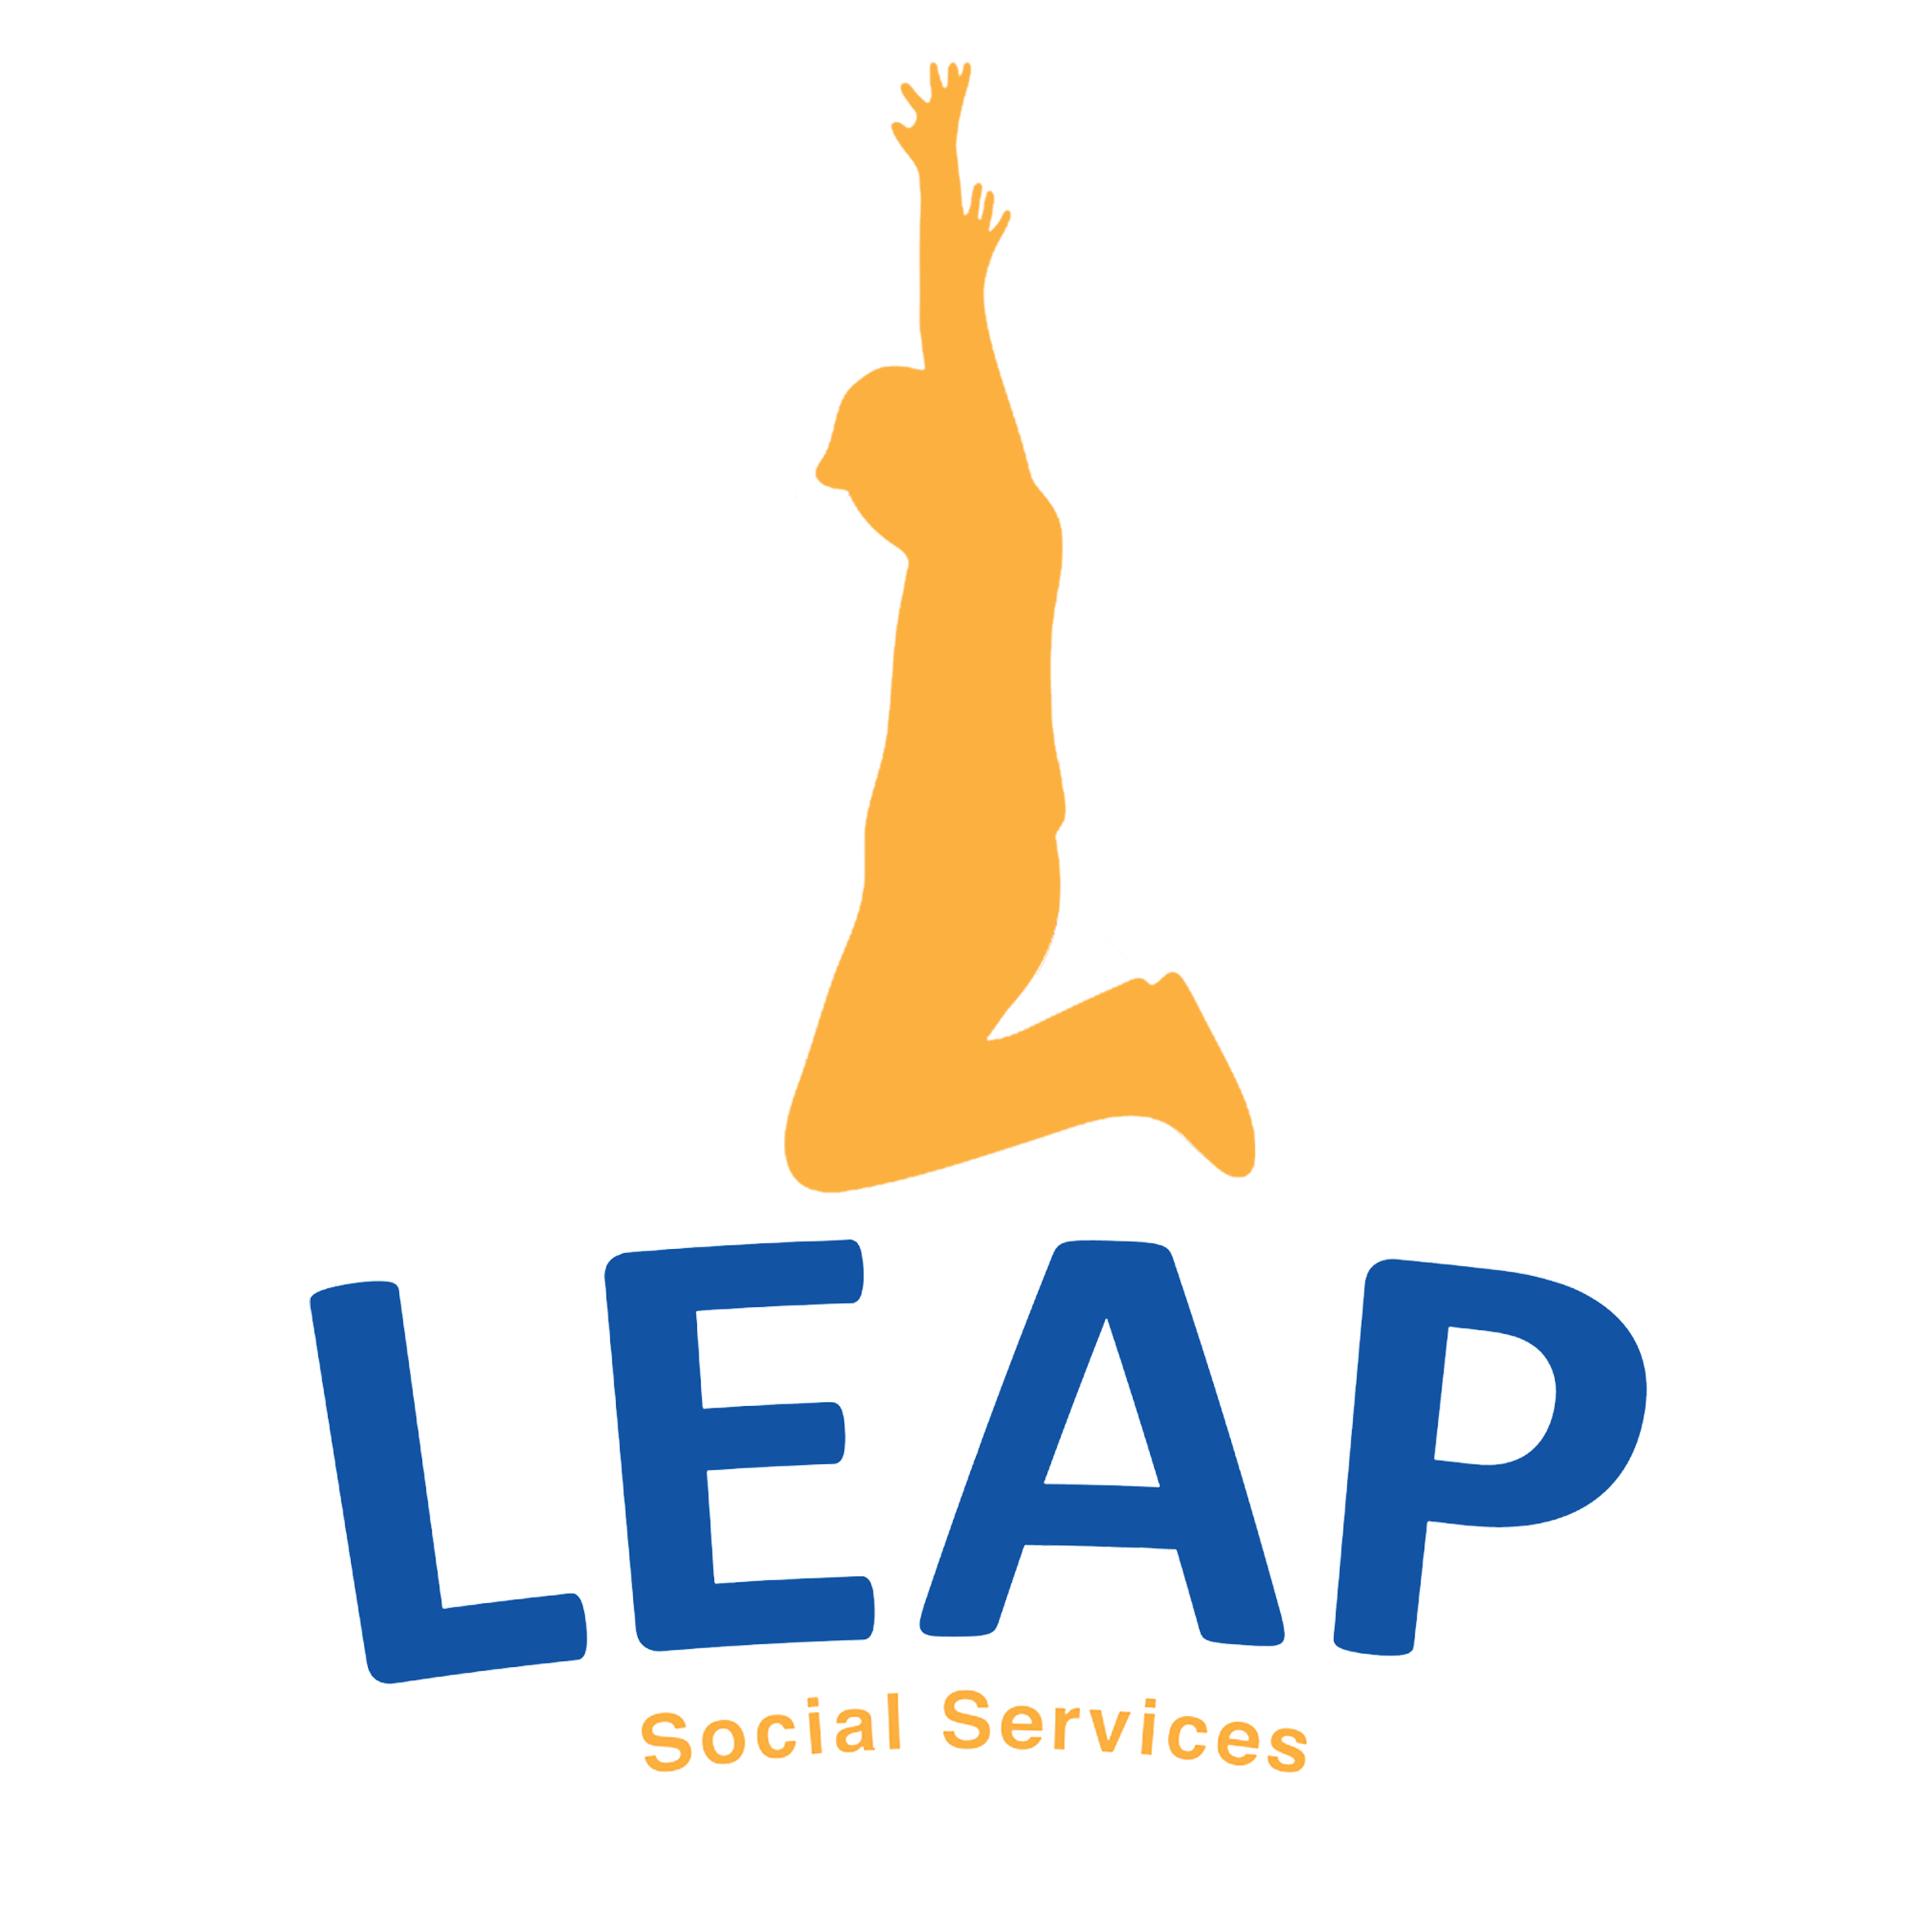 LEAP social services logo